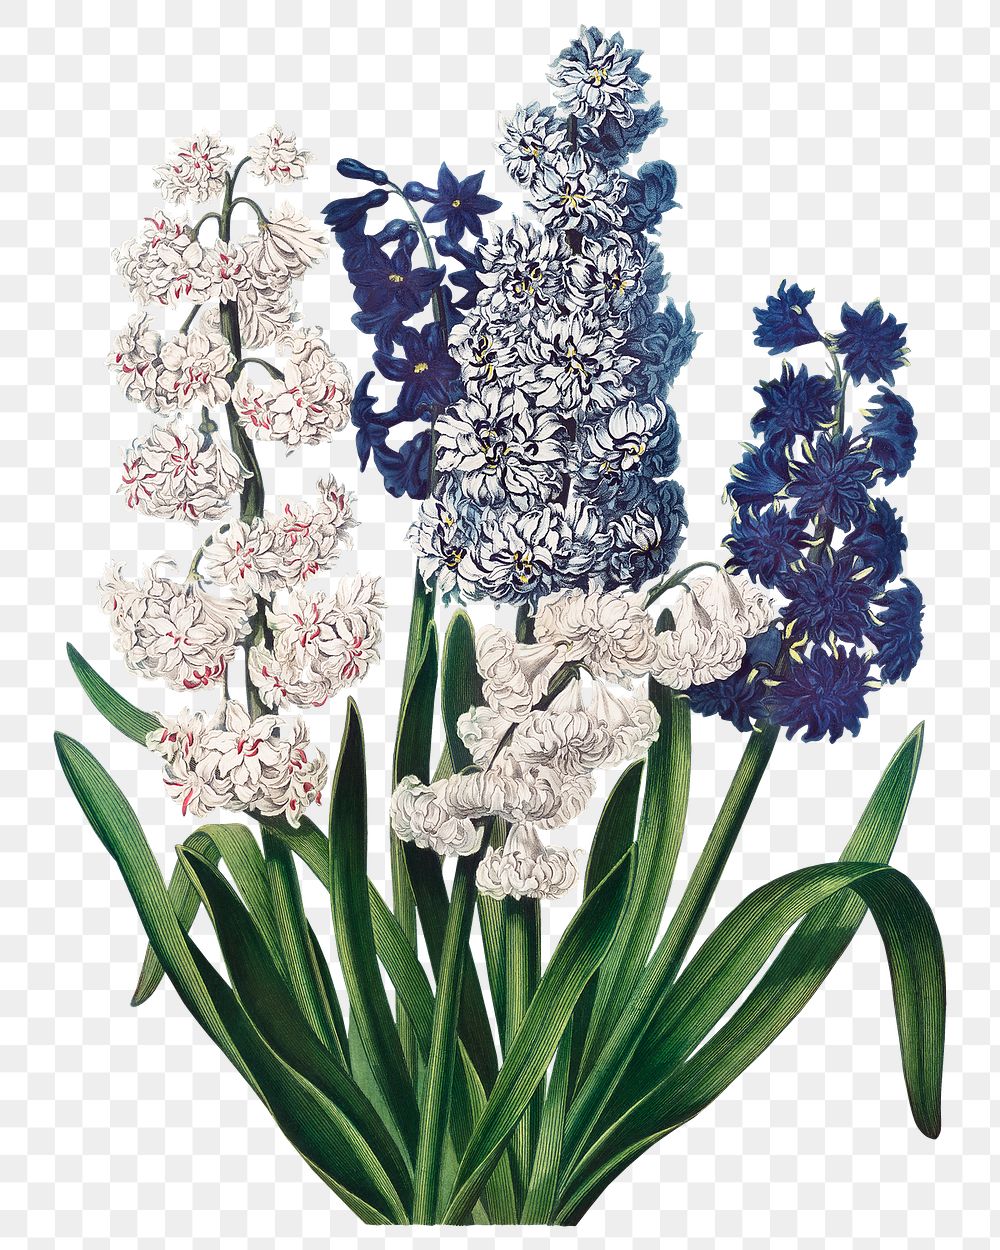 Hyacinths flower sticker, vintage botanical illustration, remix from the artwork of Robert Thornton